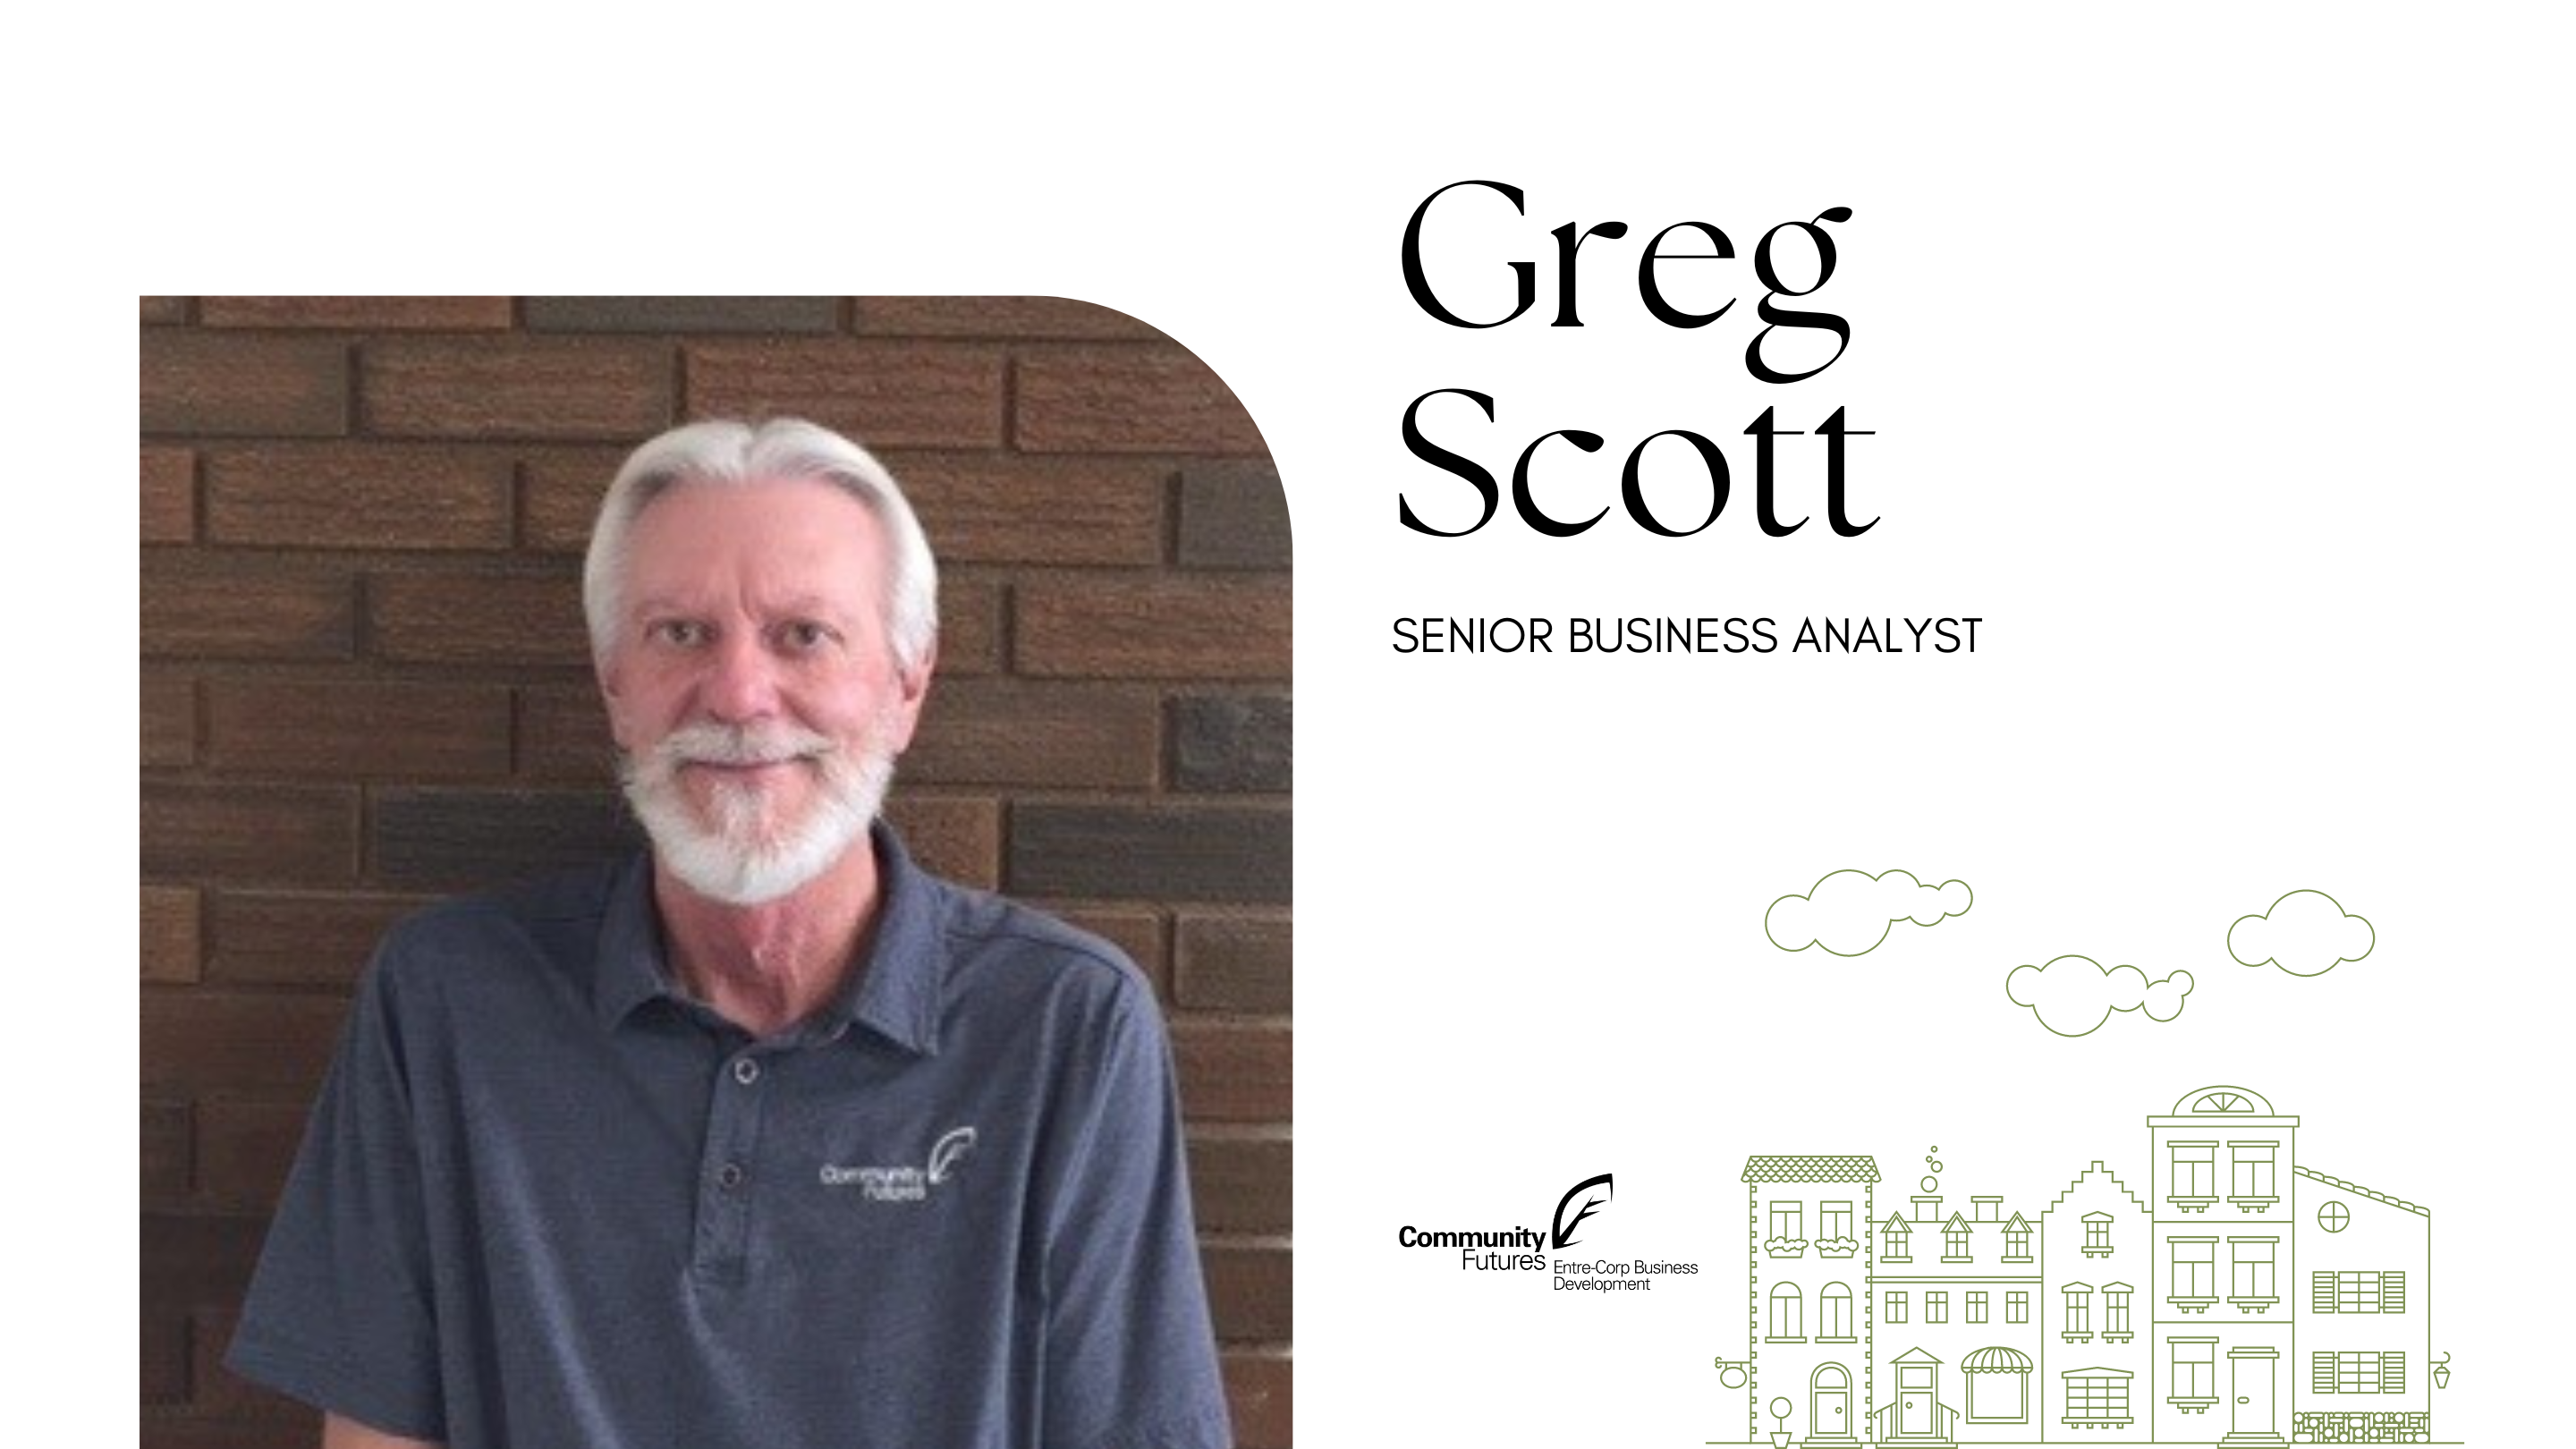 Meet Your Team: Greg Scott, Senior Business Analyst